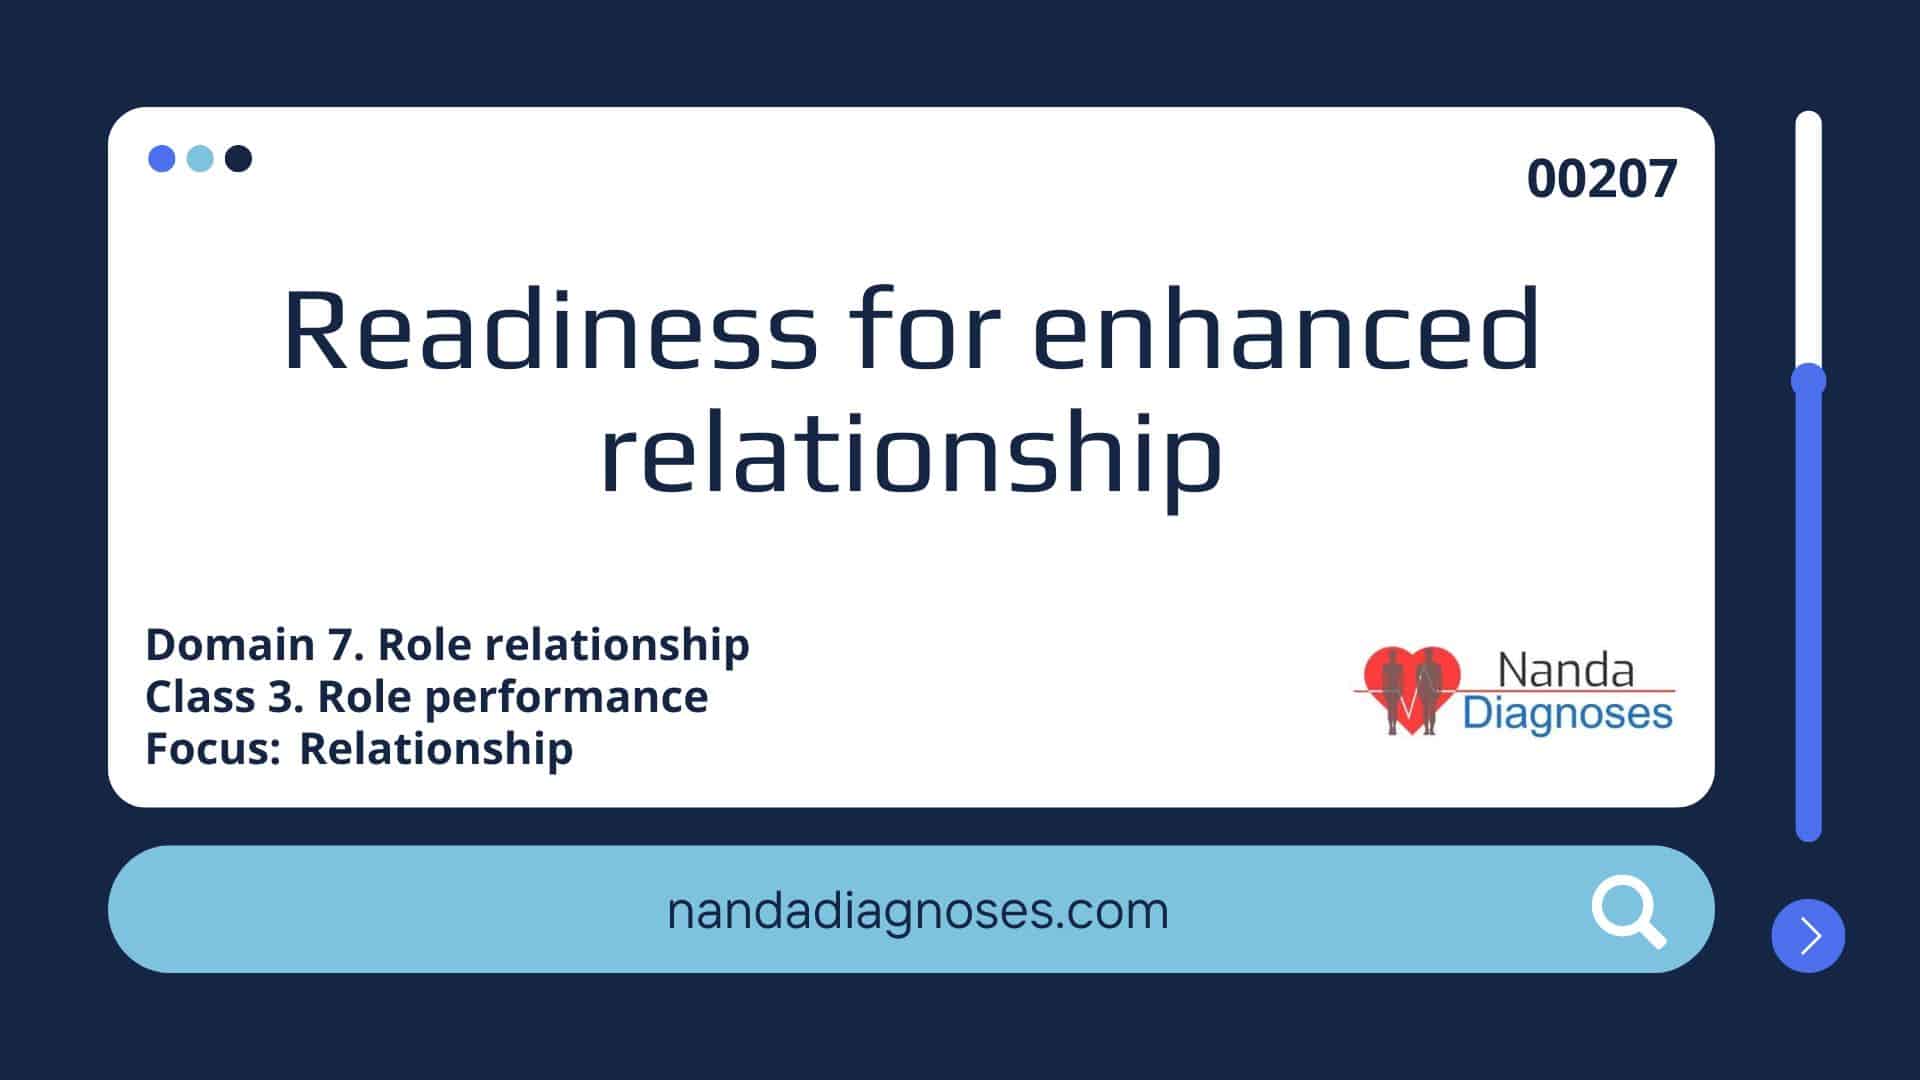 Nursing diagnosis Readiness for enhanced relationship